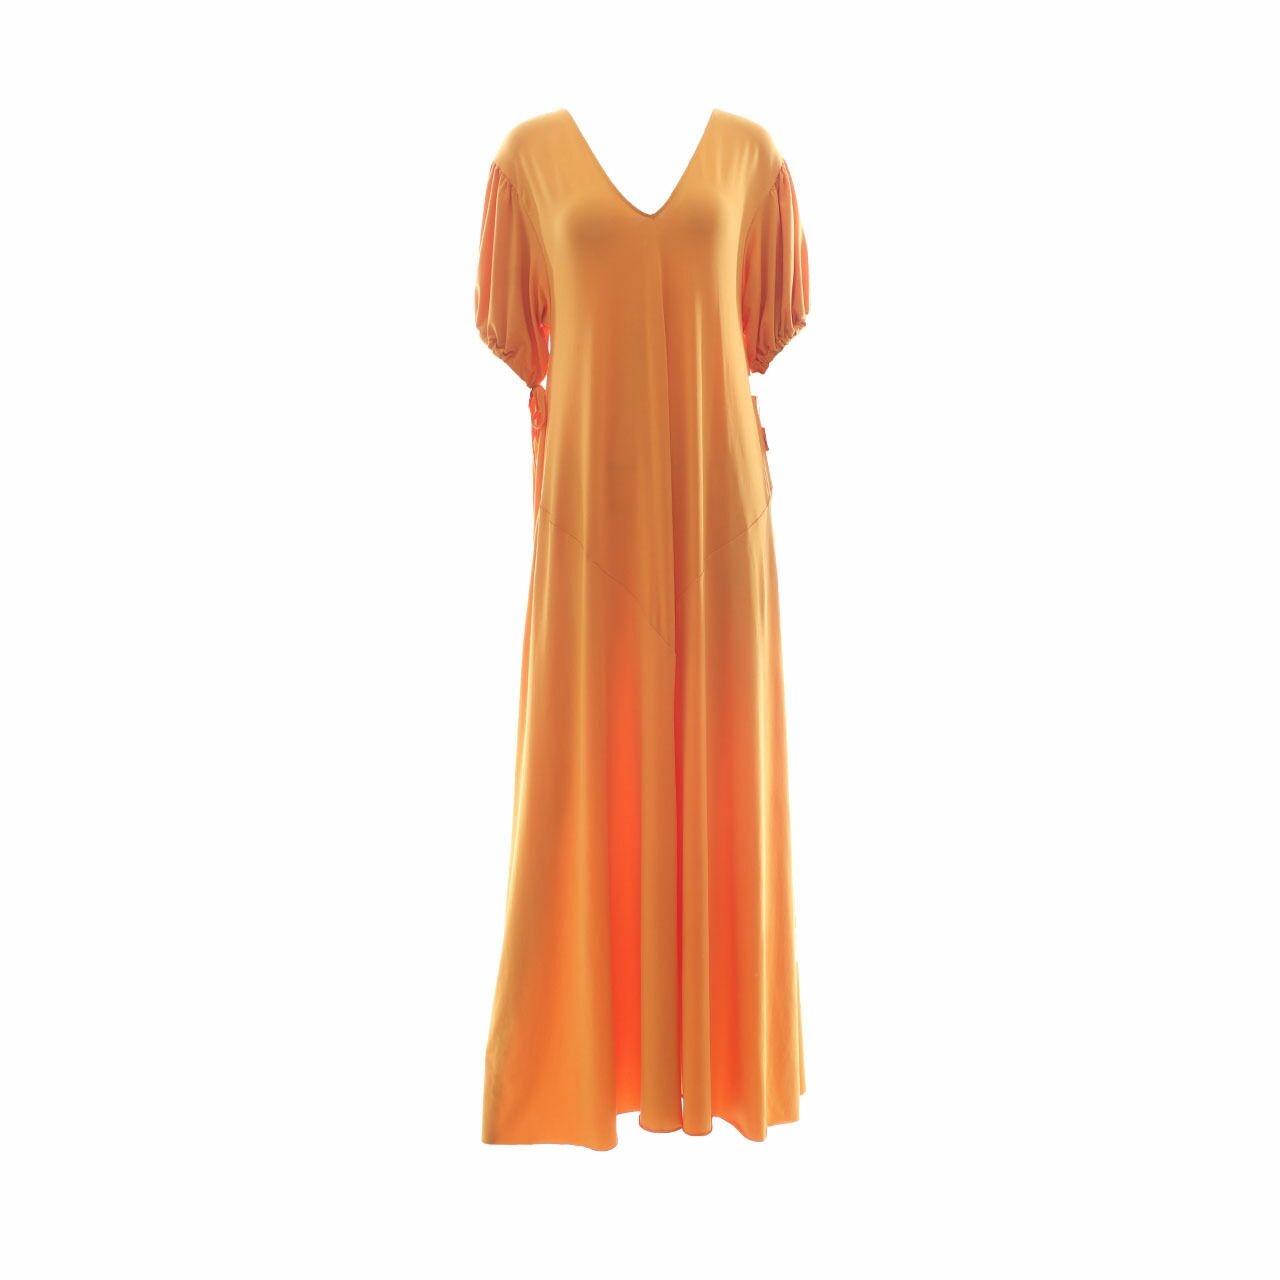 Zara Orange Long Dress